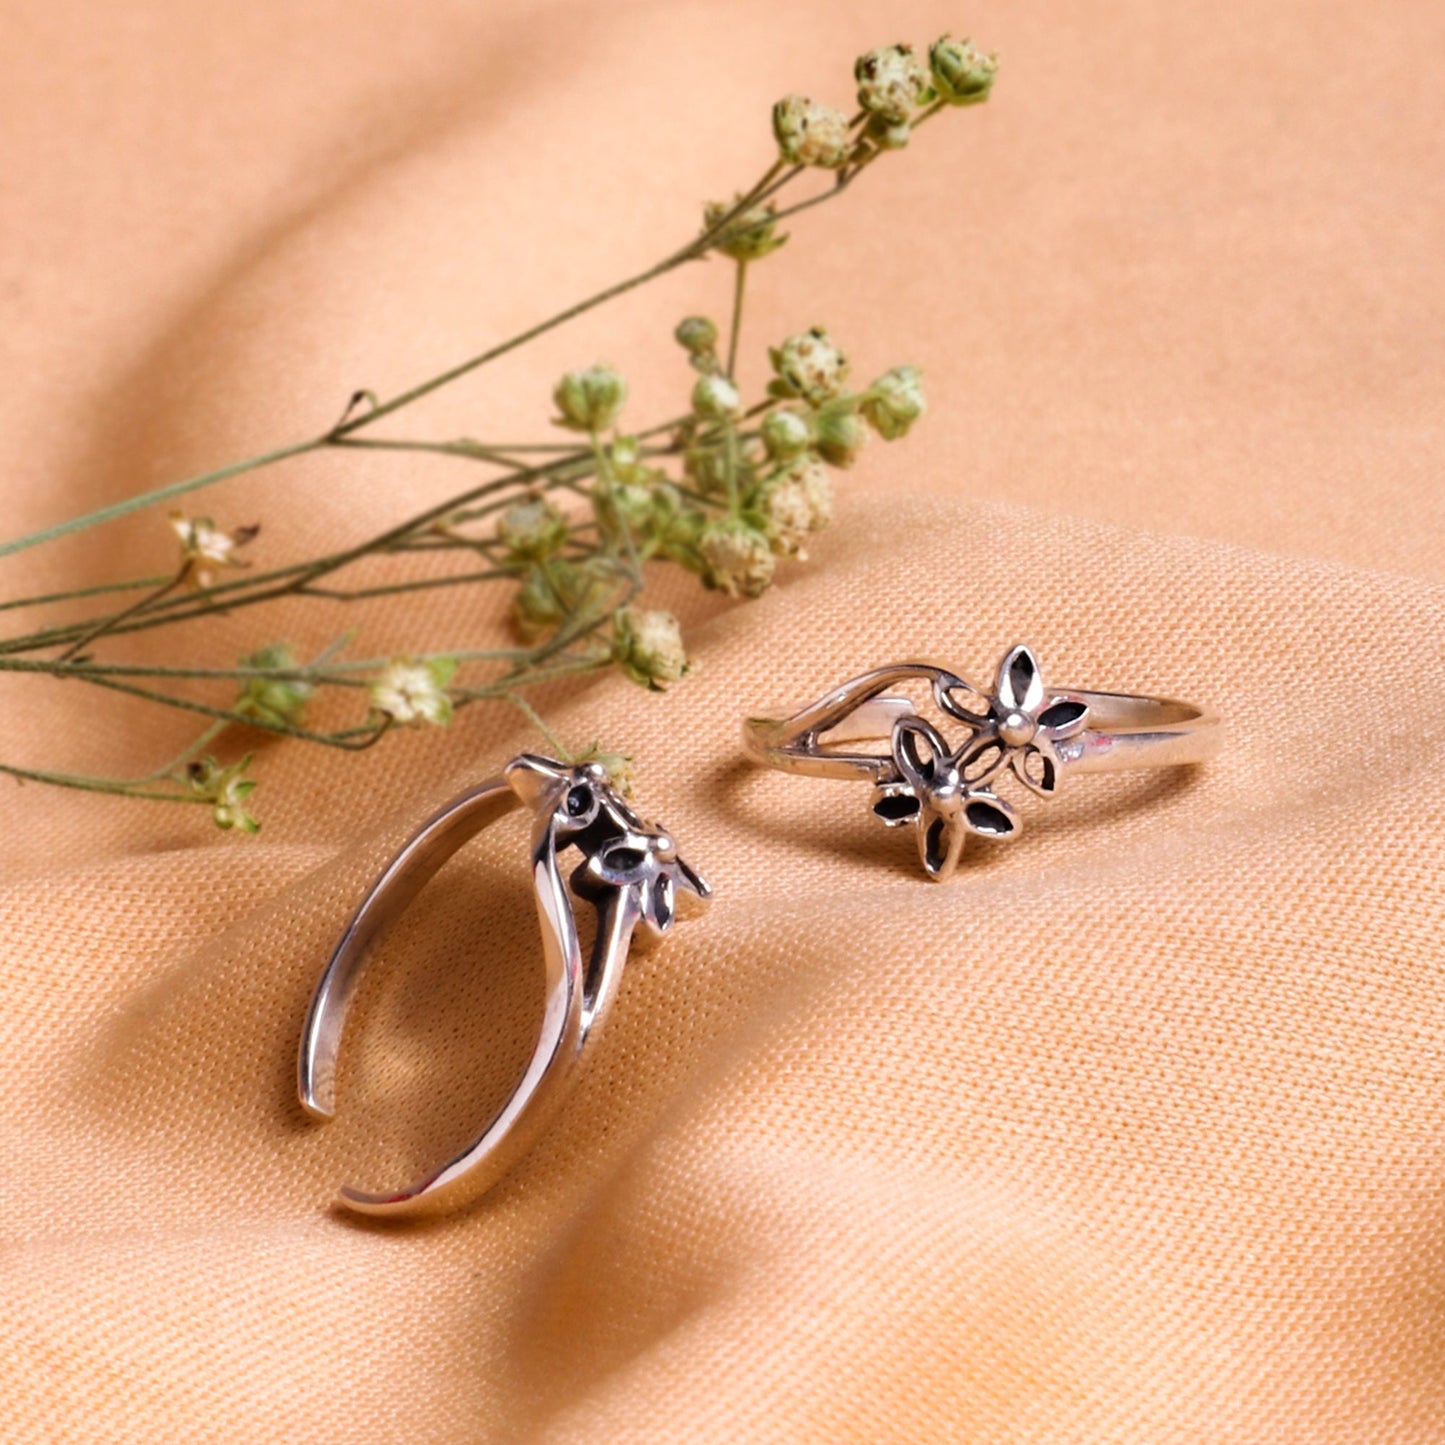 Oxidised Silver Blossom Toe Ring